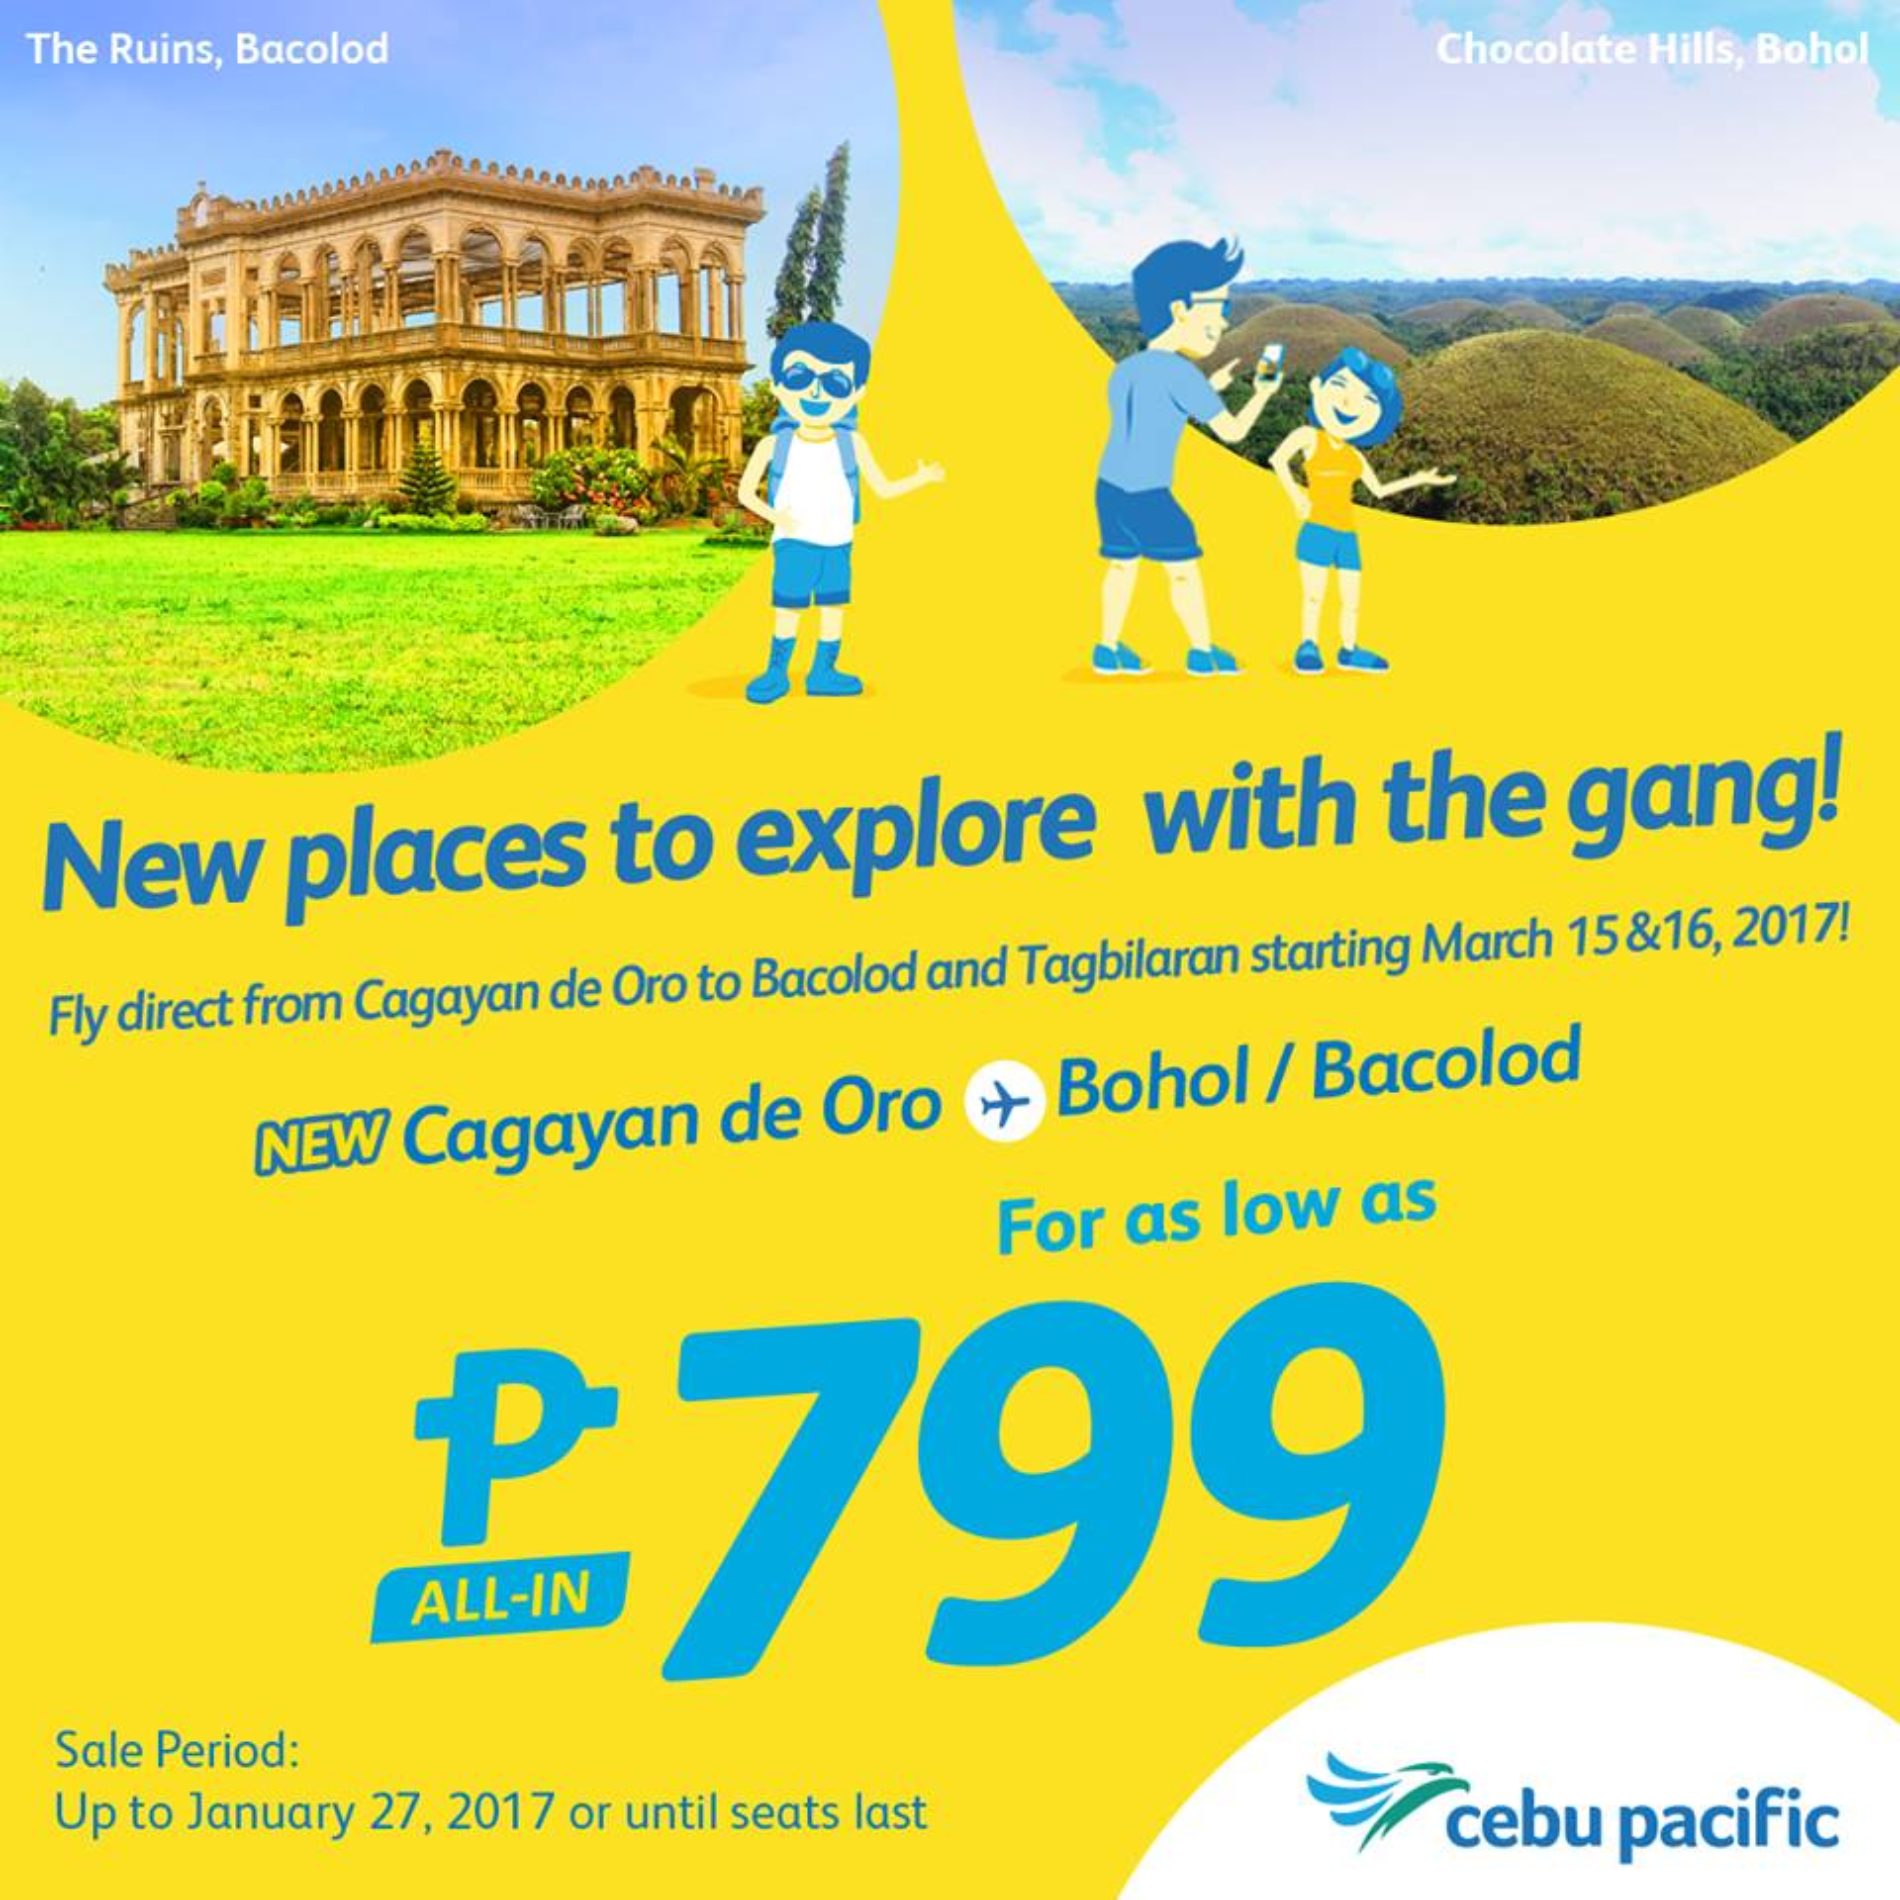 Cebu Pacific Promo SALE PERIOD: UP TO JUL 13, 2017 ...